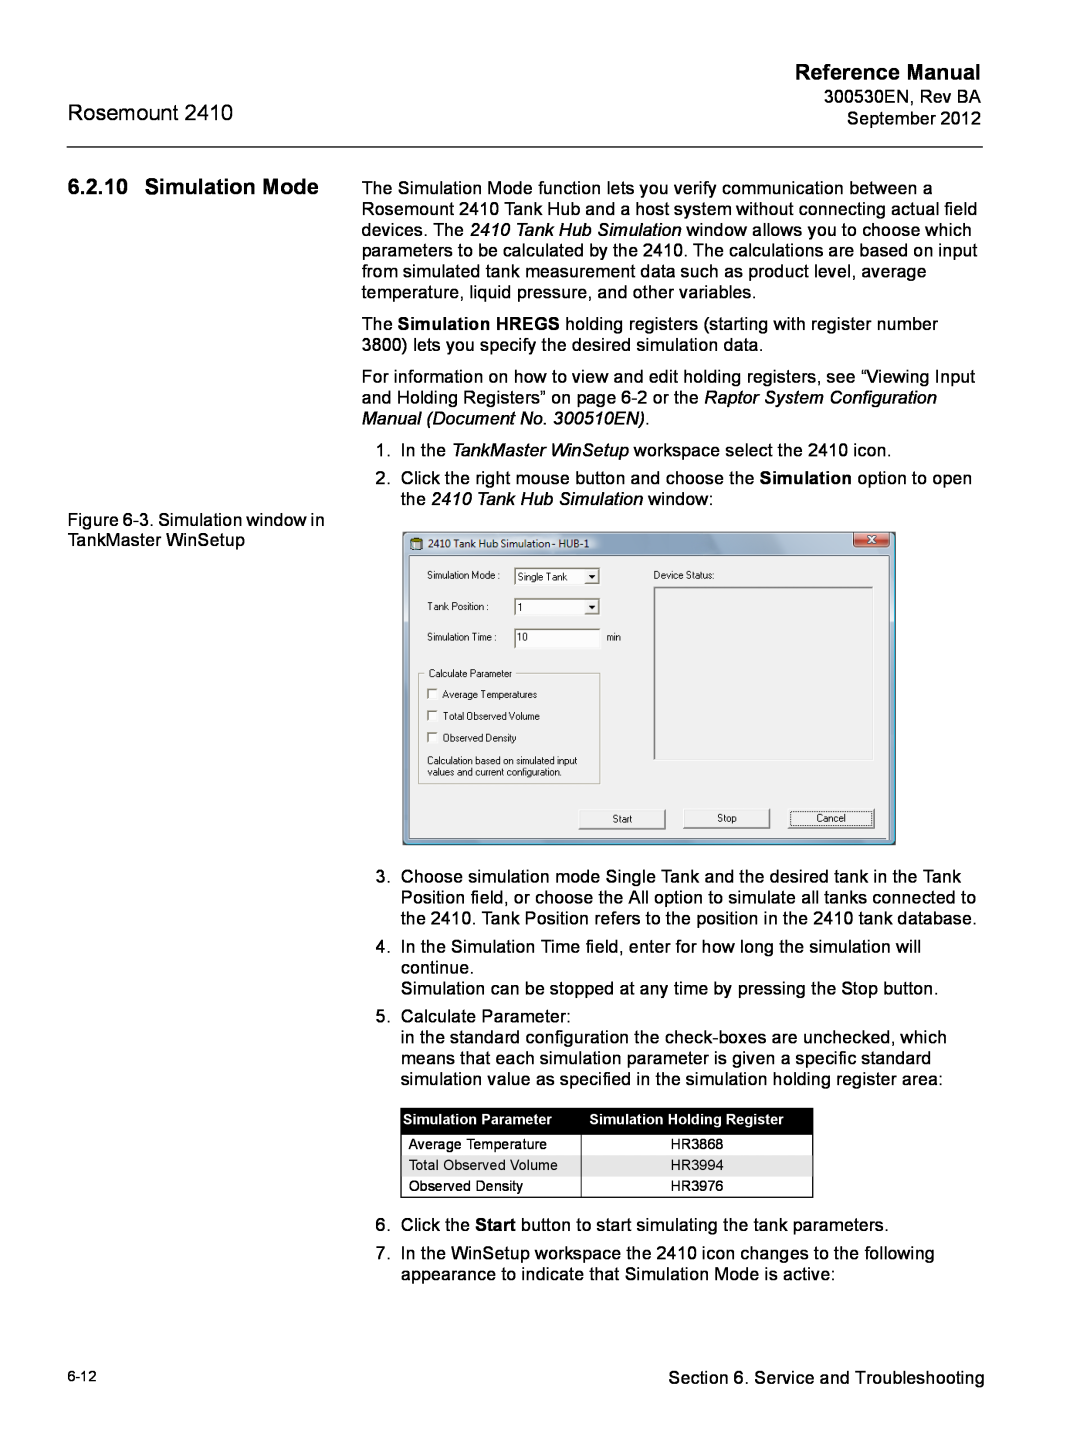 Emerson Process Management Rosemount 2410 manual Reference Manual, Simulation Parameter, Simulation Holding Register 